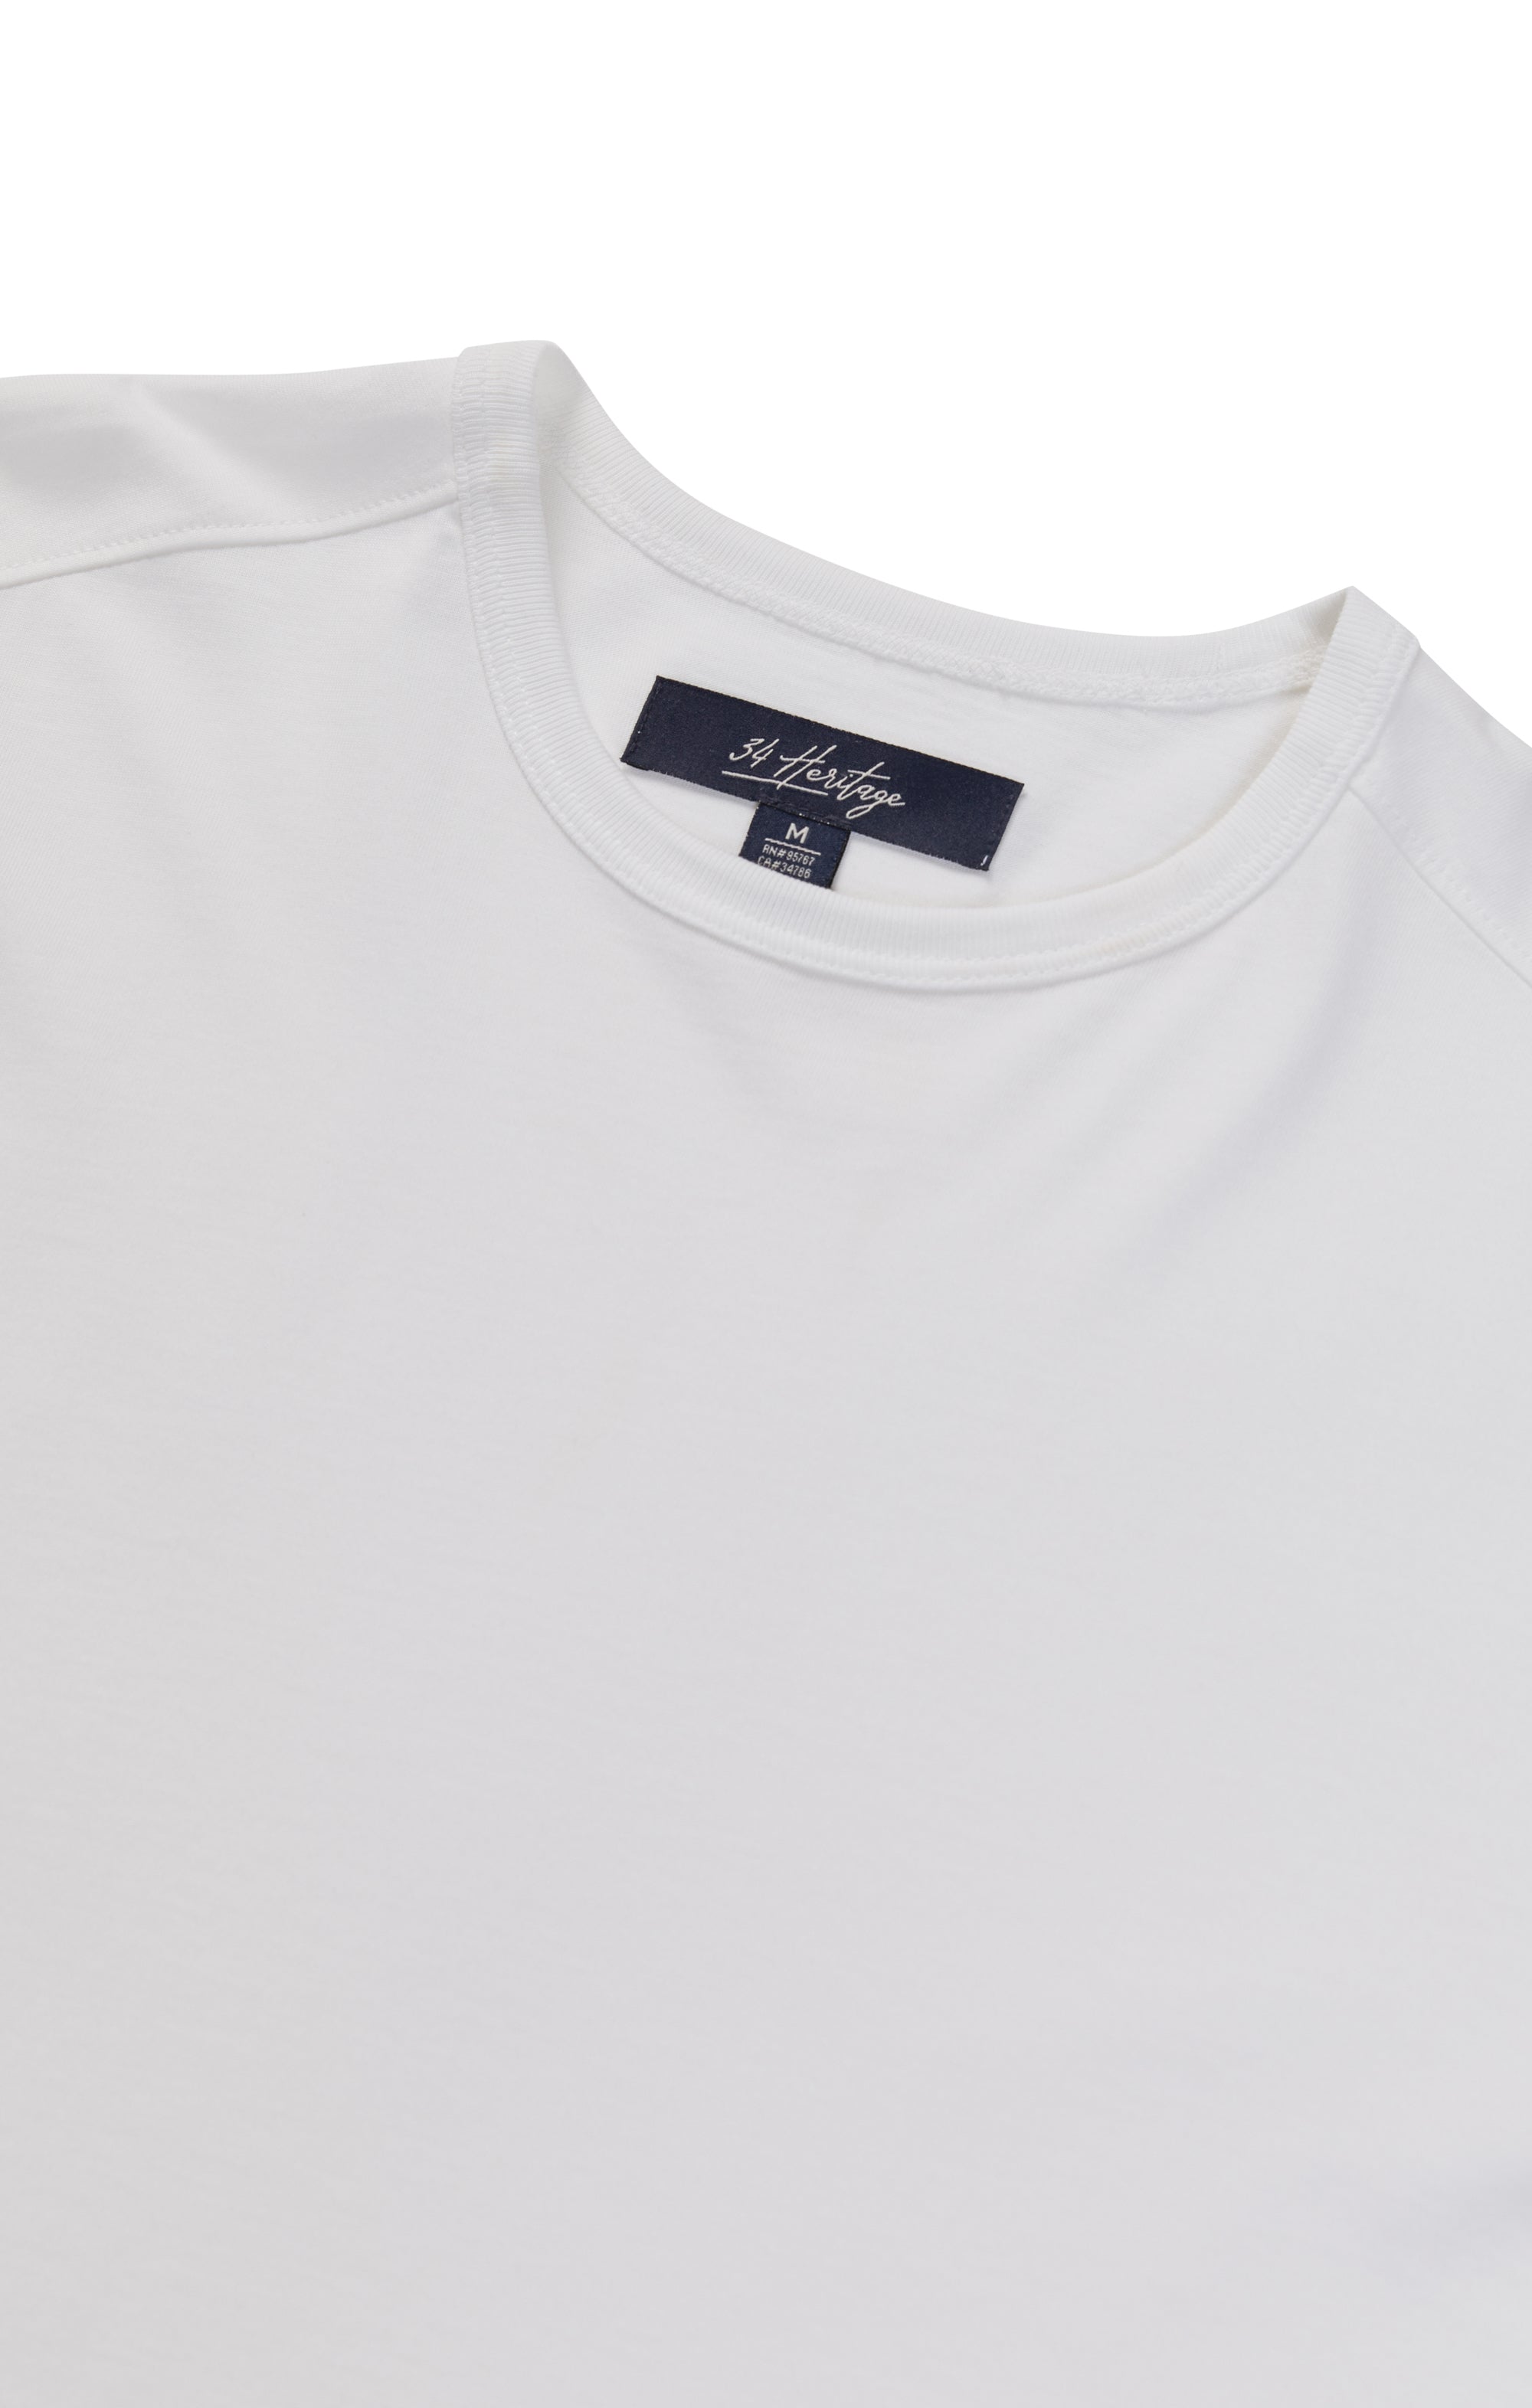 Basic Crew Neck T-Shirt in White Image 8